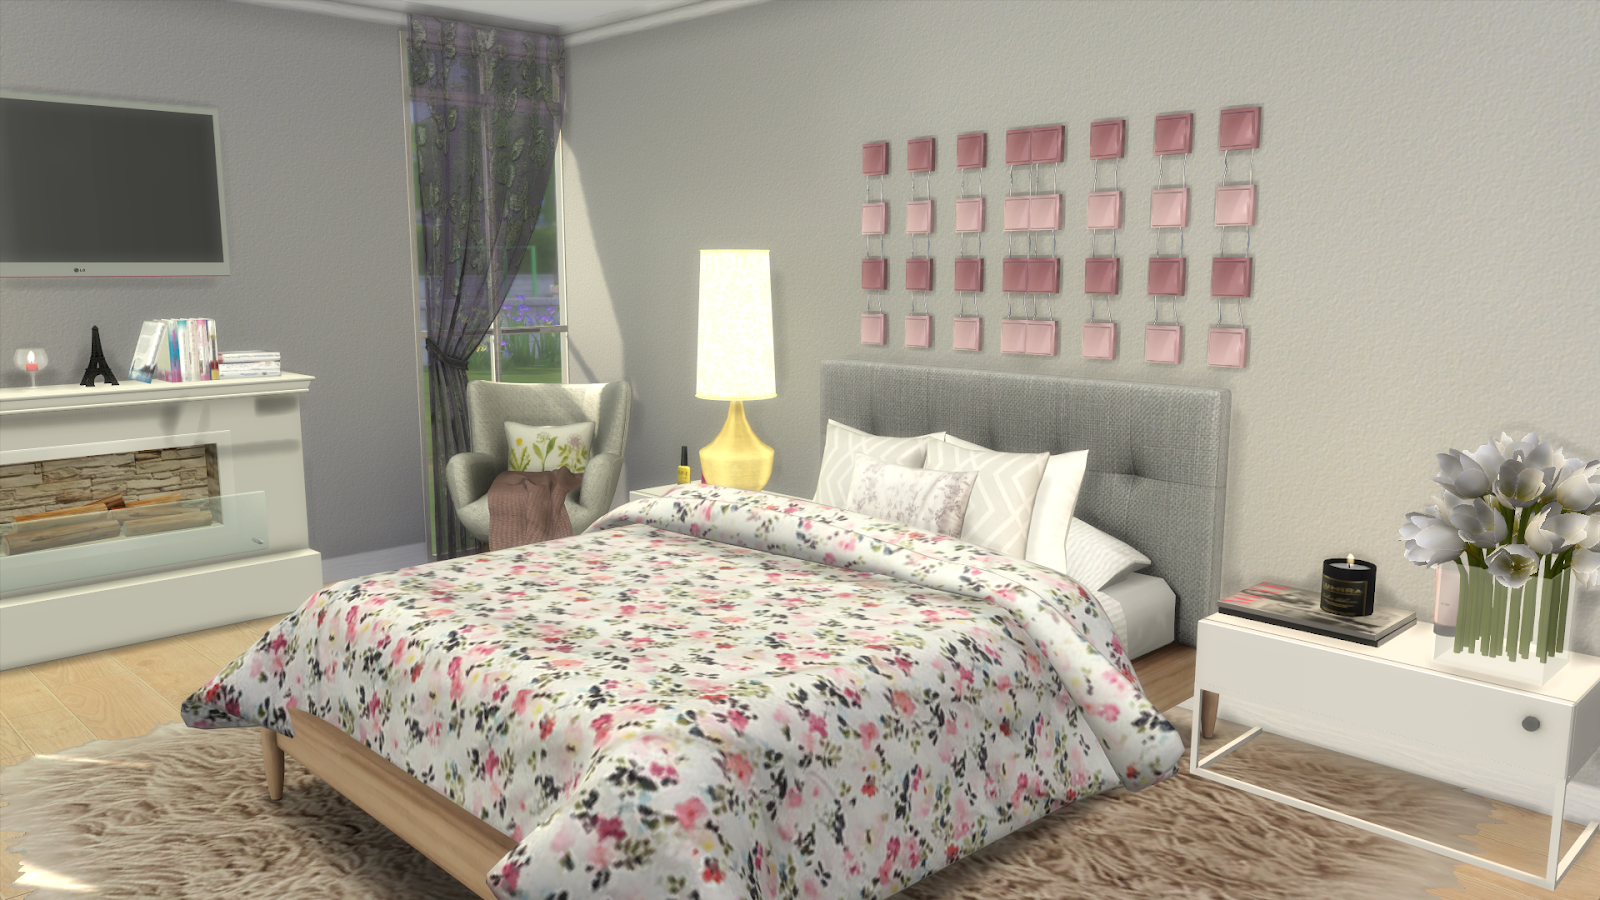 sims 4 custom content bedroom furniture